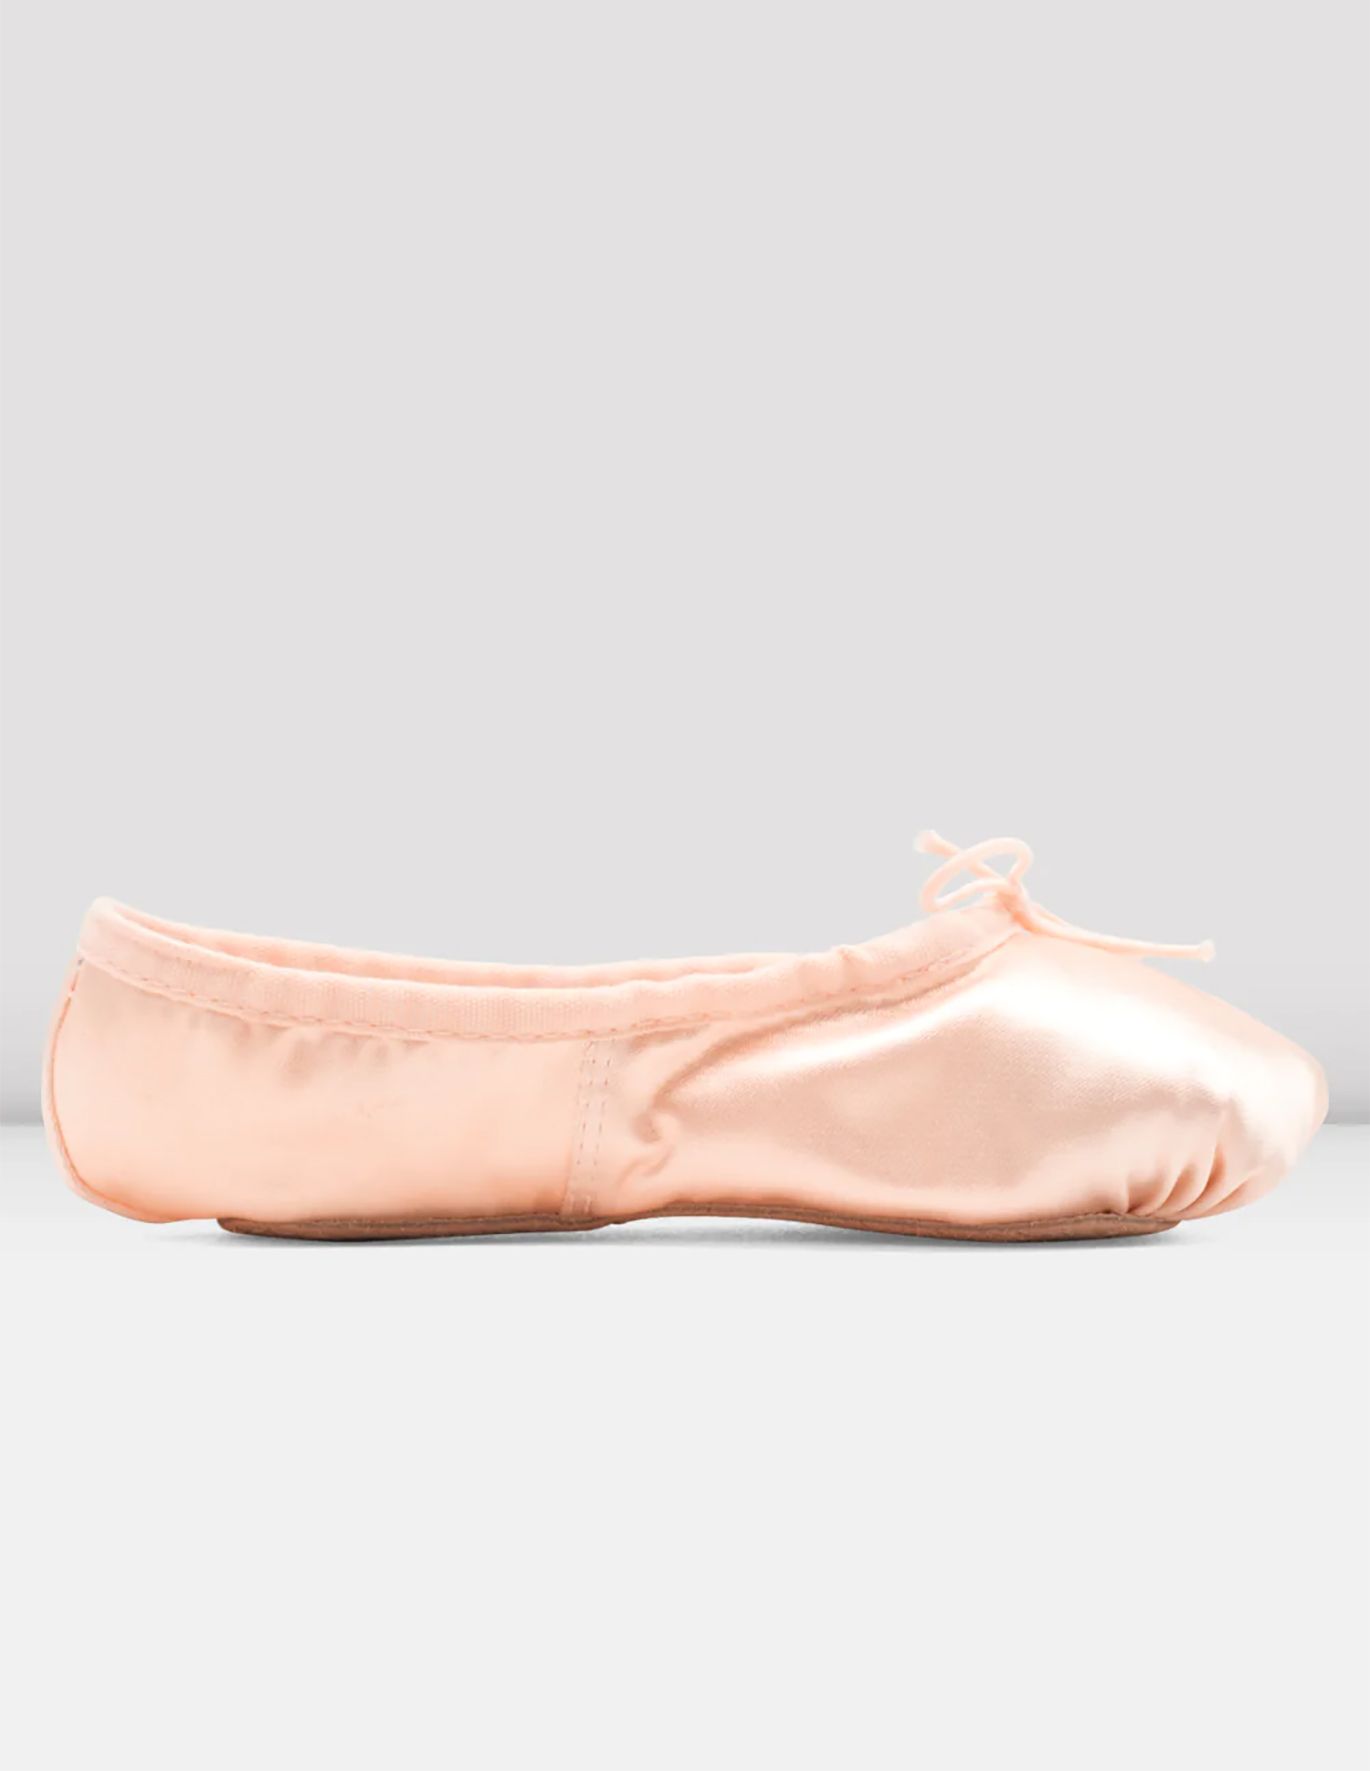 Bloch RAD Prolite Satin Full Sole Ballet Shoe Model S0231